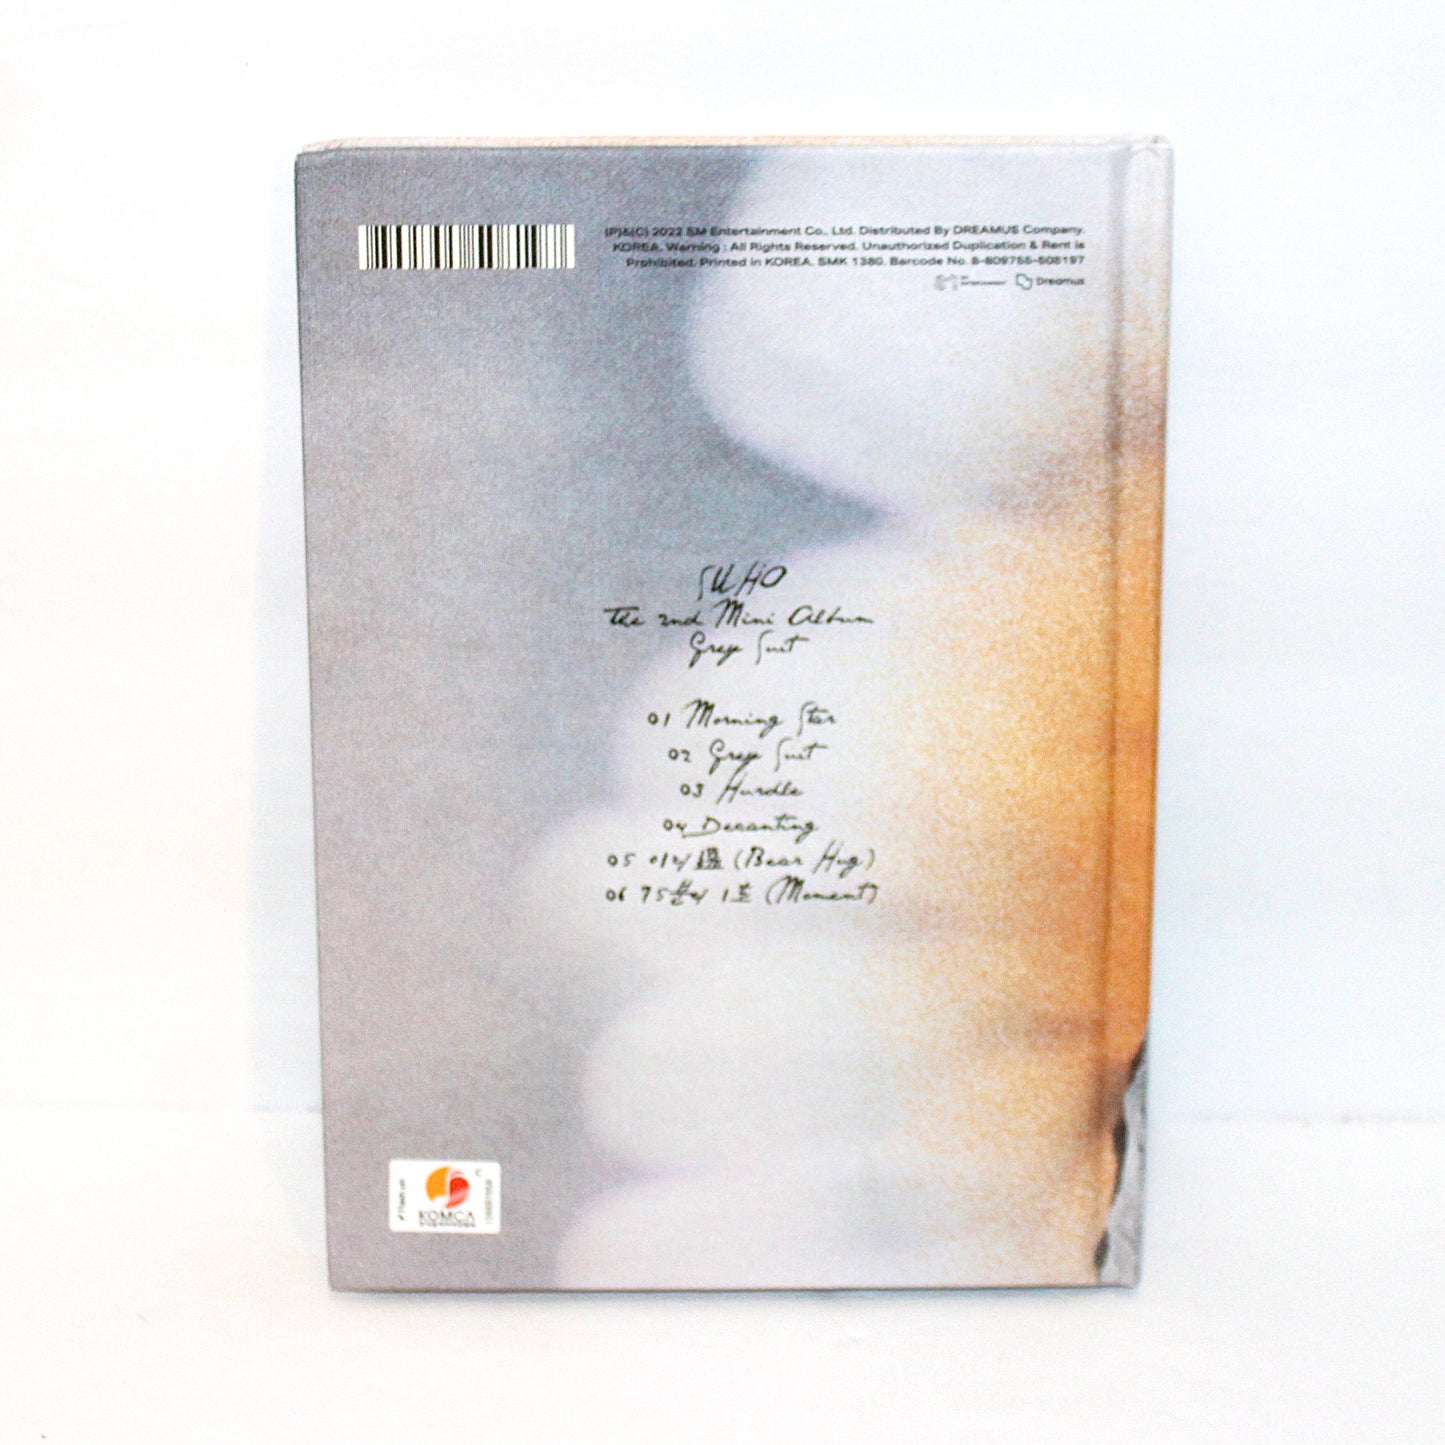 SUHO 2nd Mini Album: Grey Suit | Photobook Ver.